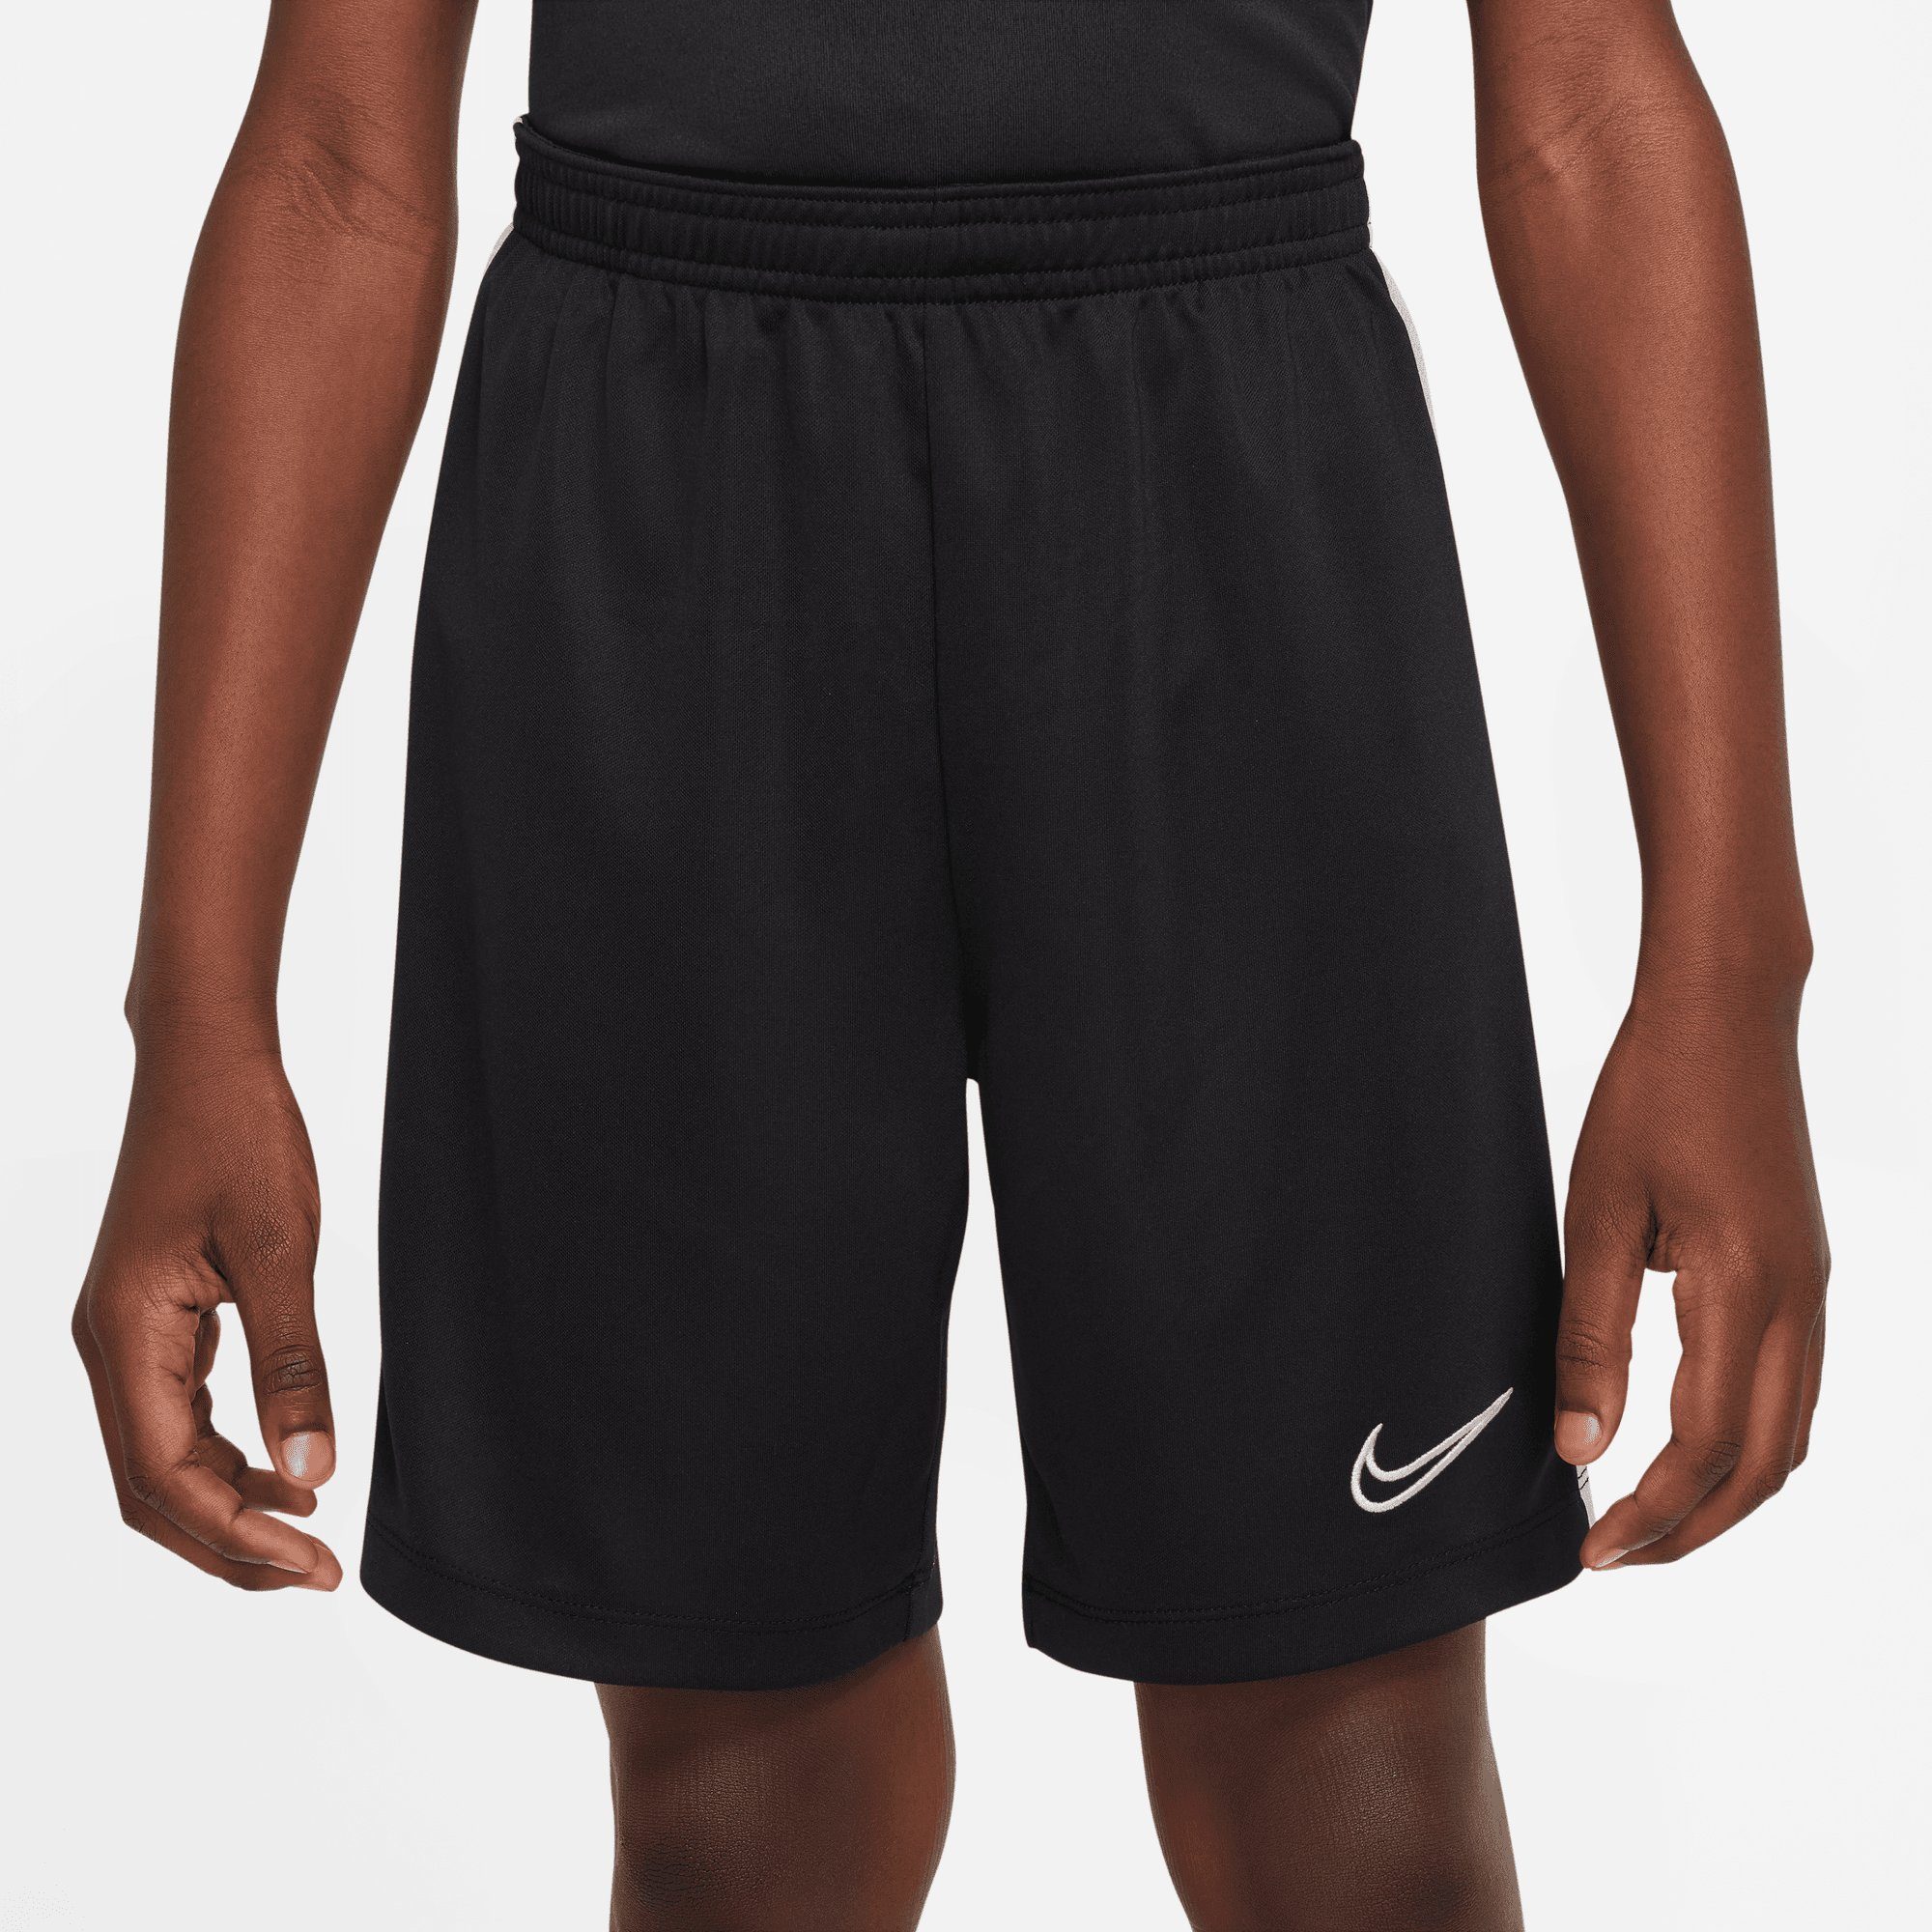 ACADEMY Nike KIDS' DRI-FIT BLACK/WHITE/BLACK/WHITE SHORTS Trainingsshorts